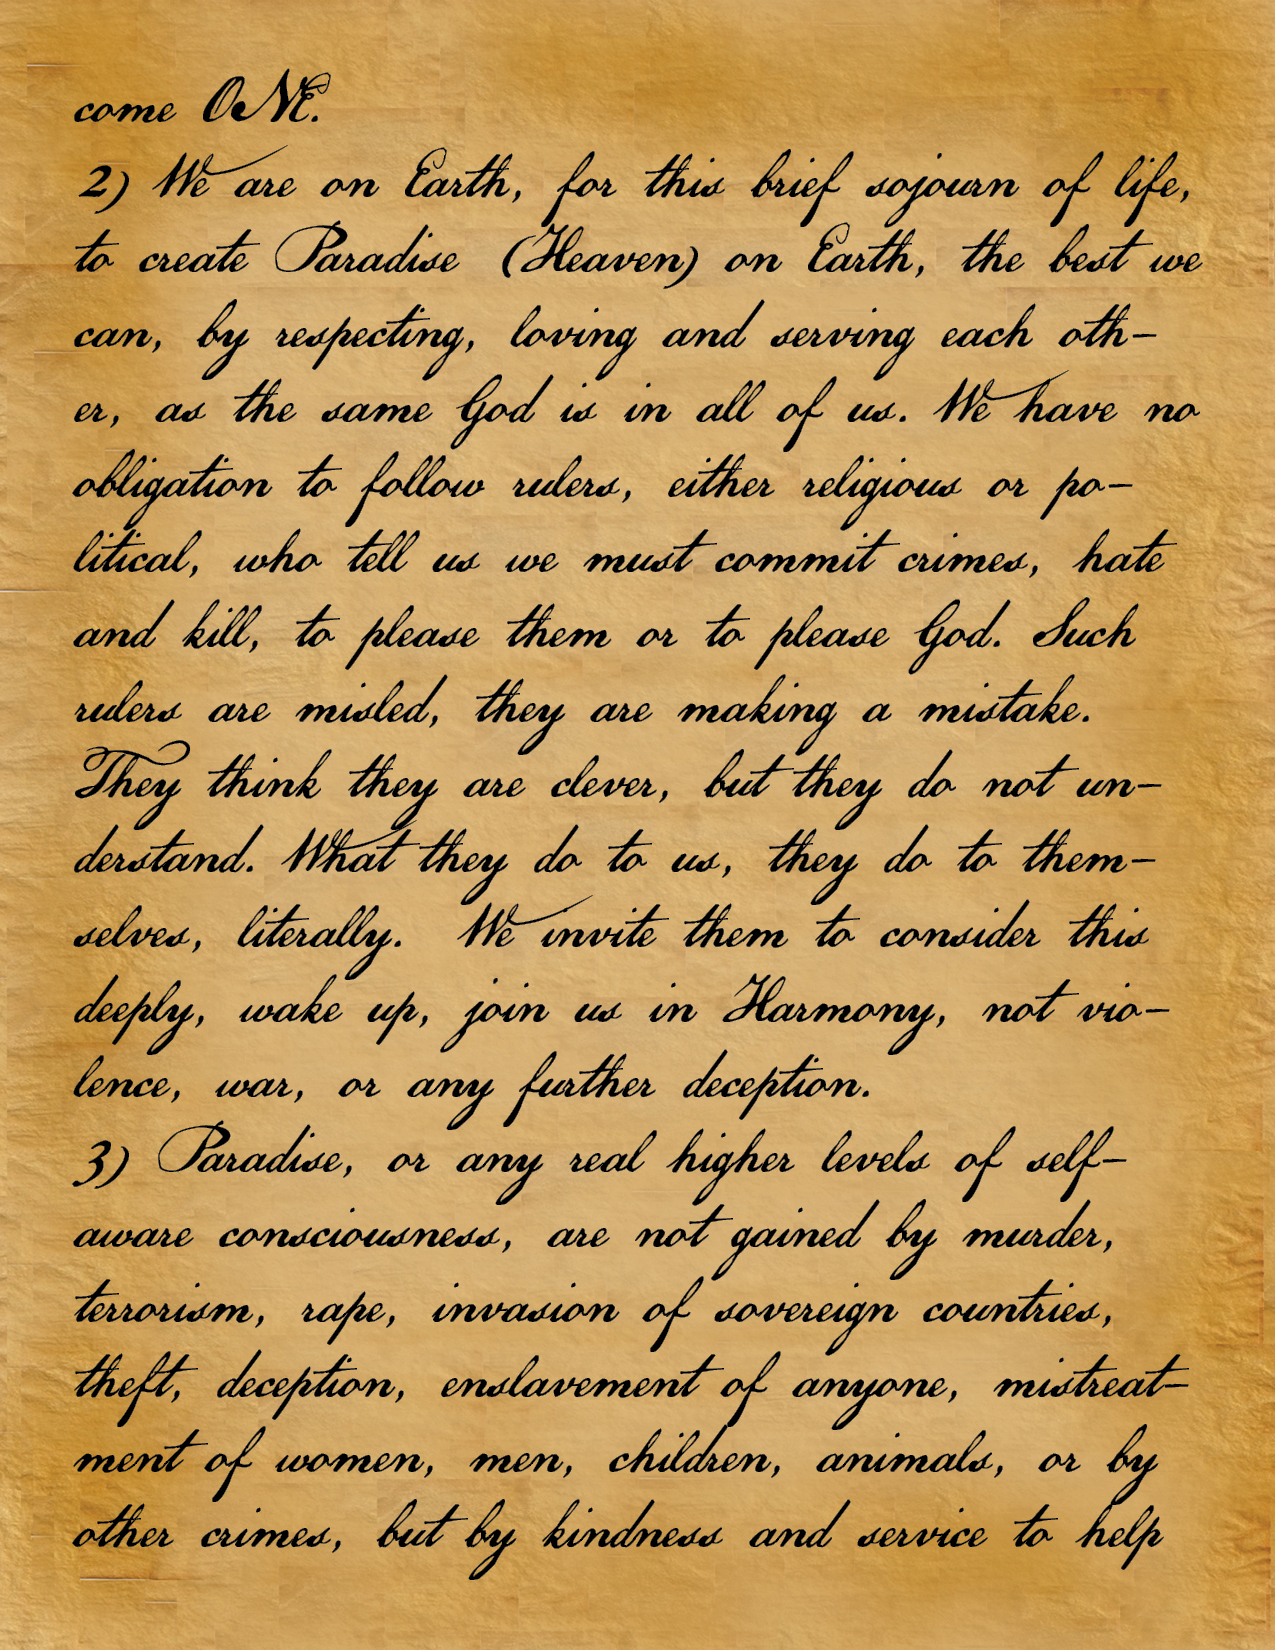 Muslim Declaration of Independence